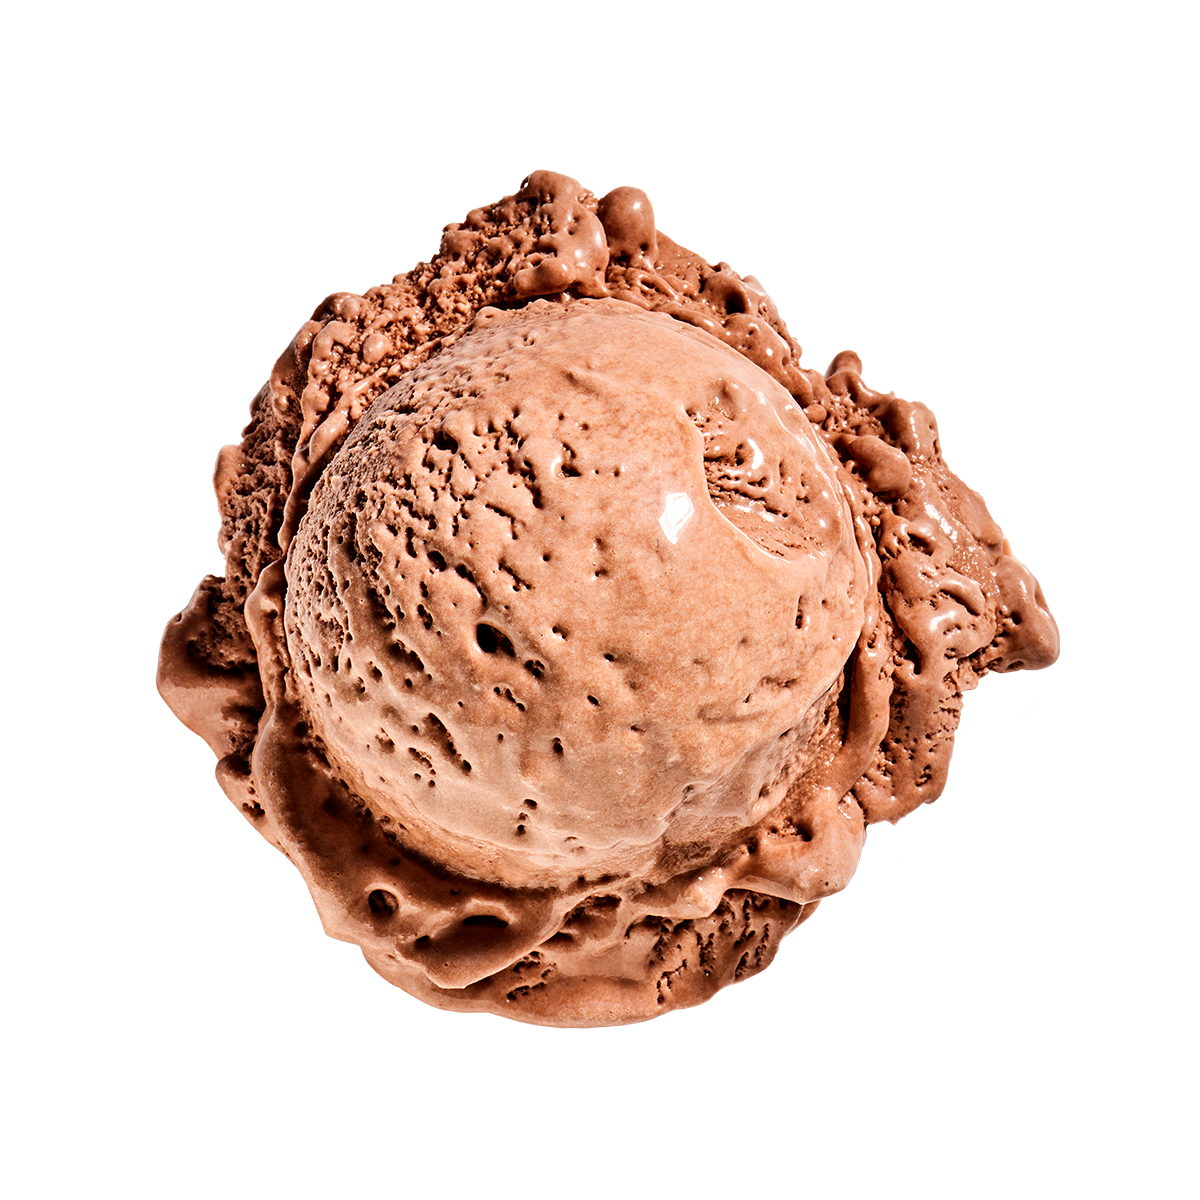 ice cream scoop